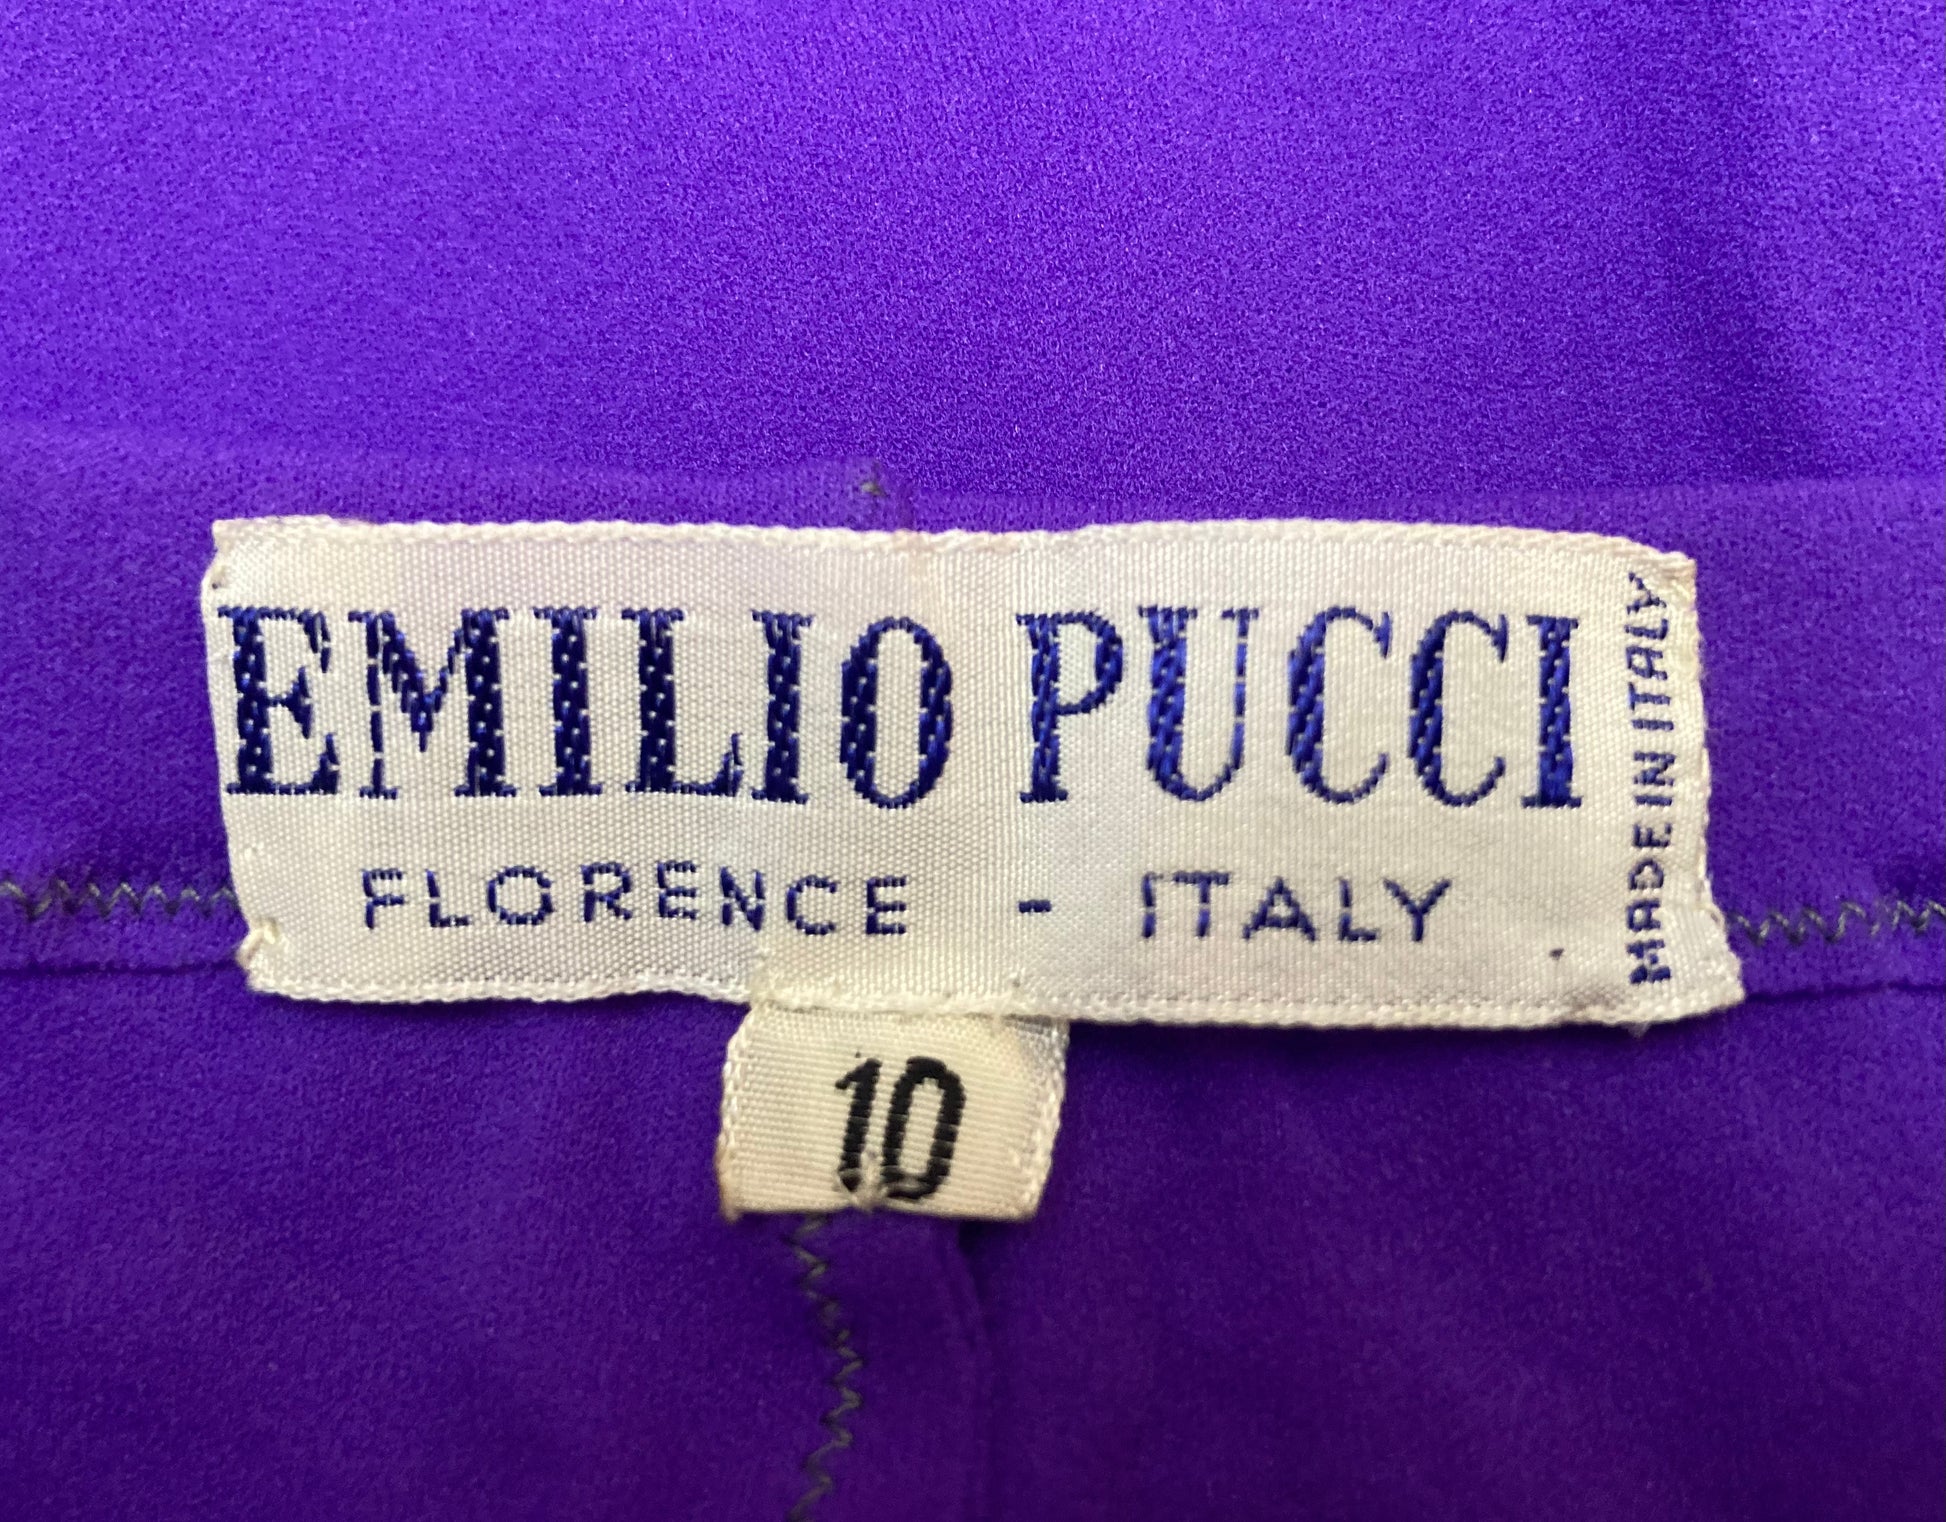 Collant Pucci Alice In Vintage